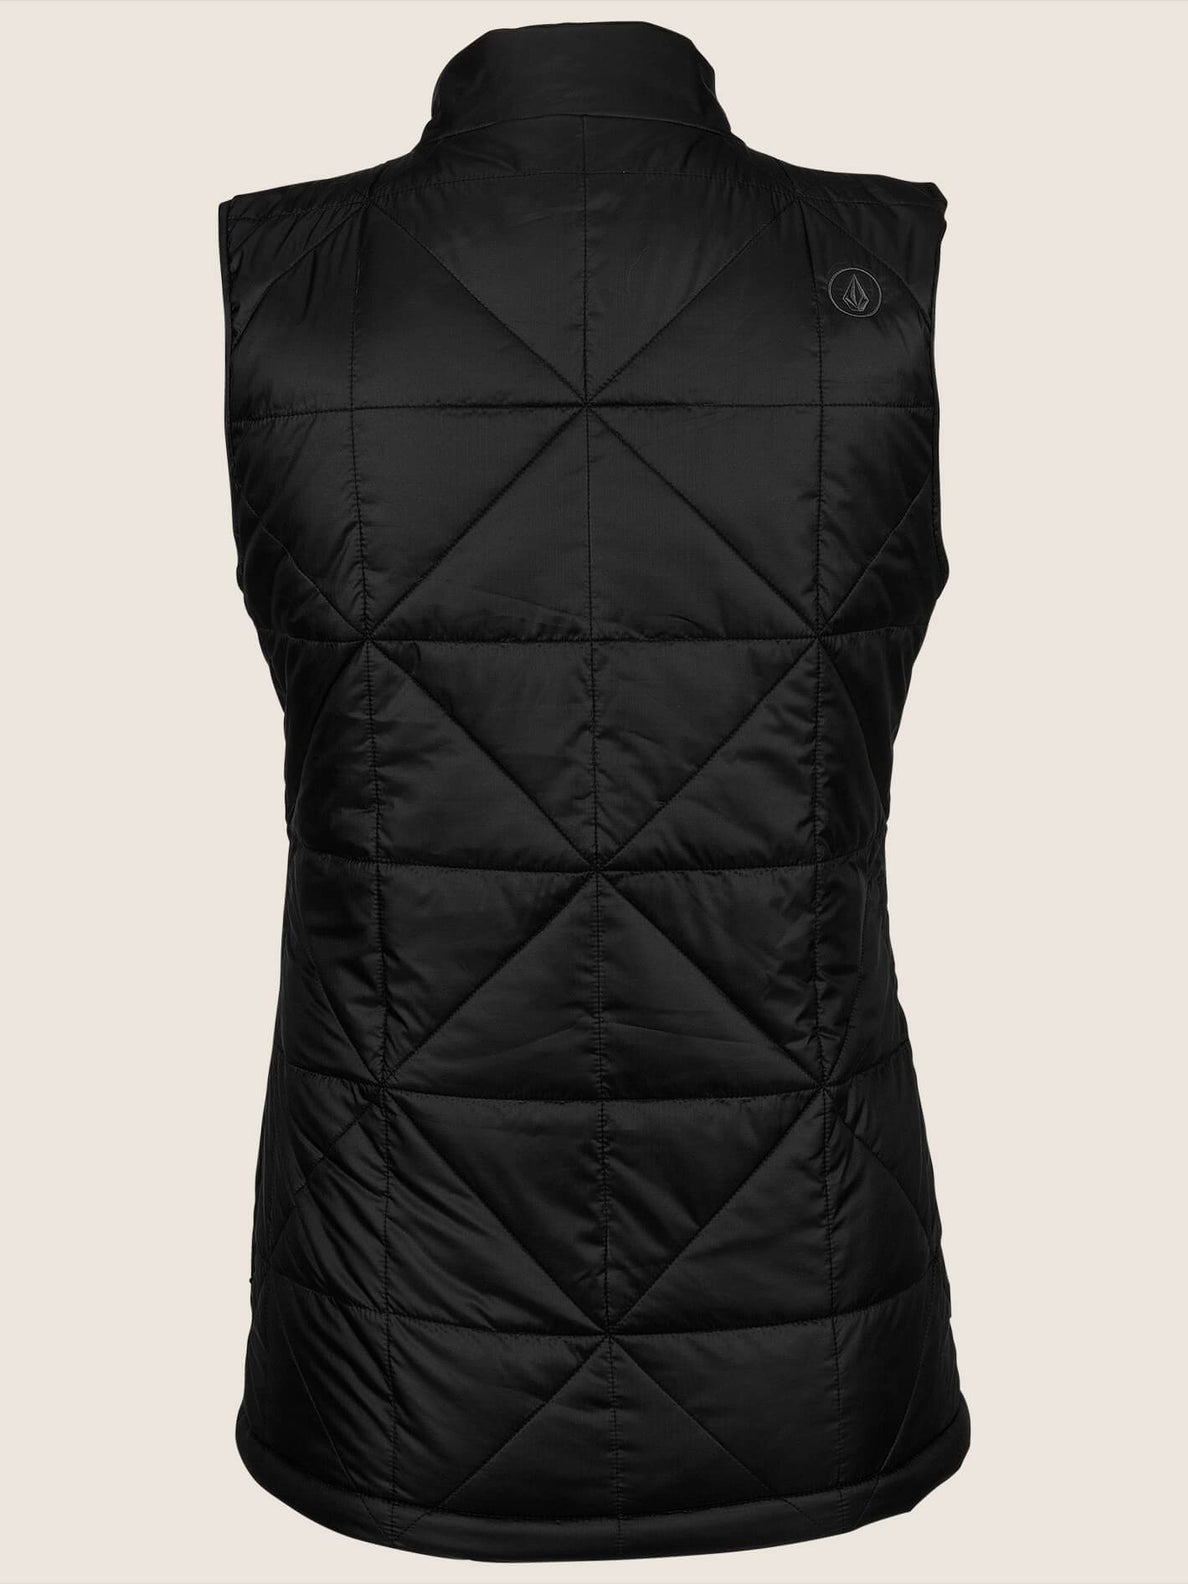 Vault 3-In-1 Jacket - Black Floral Print